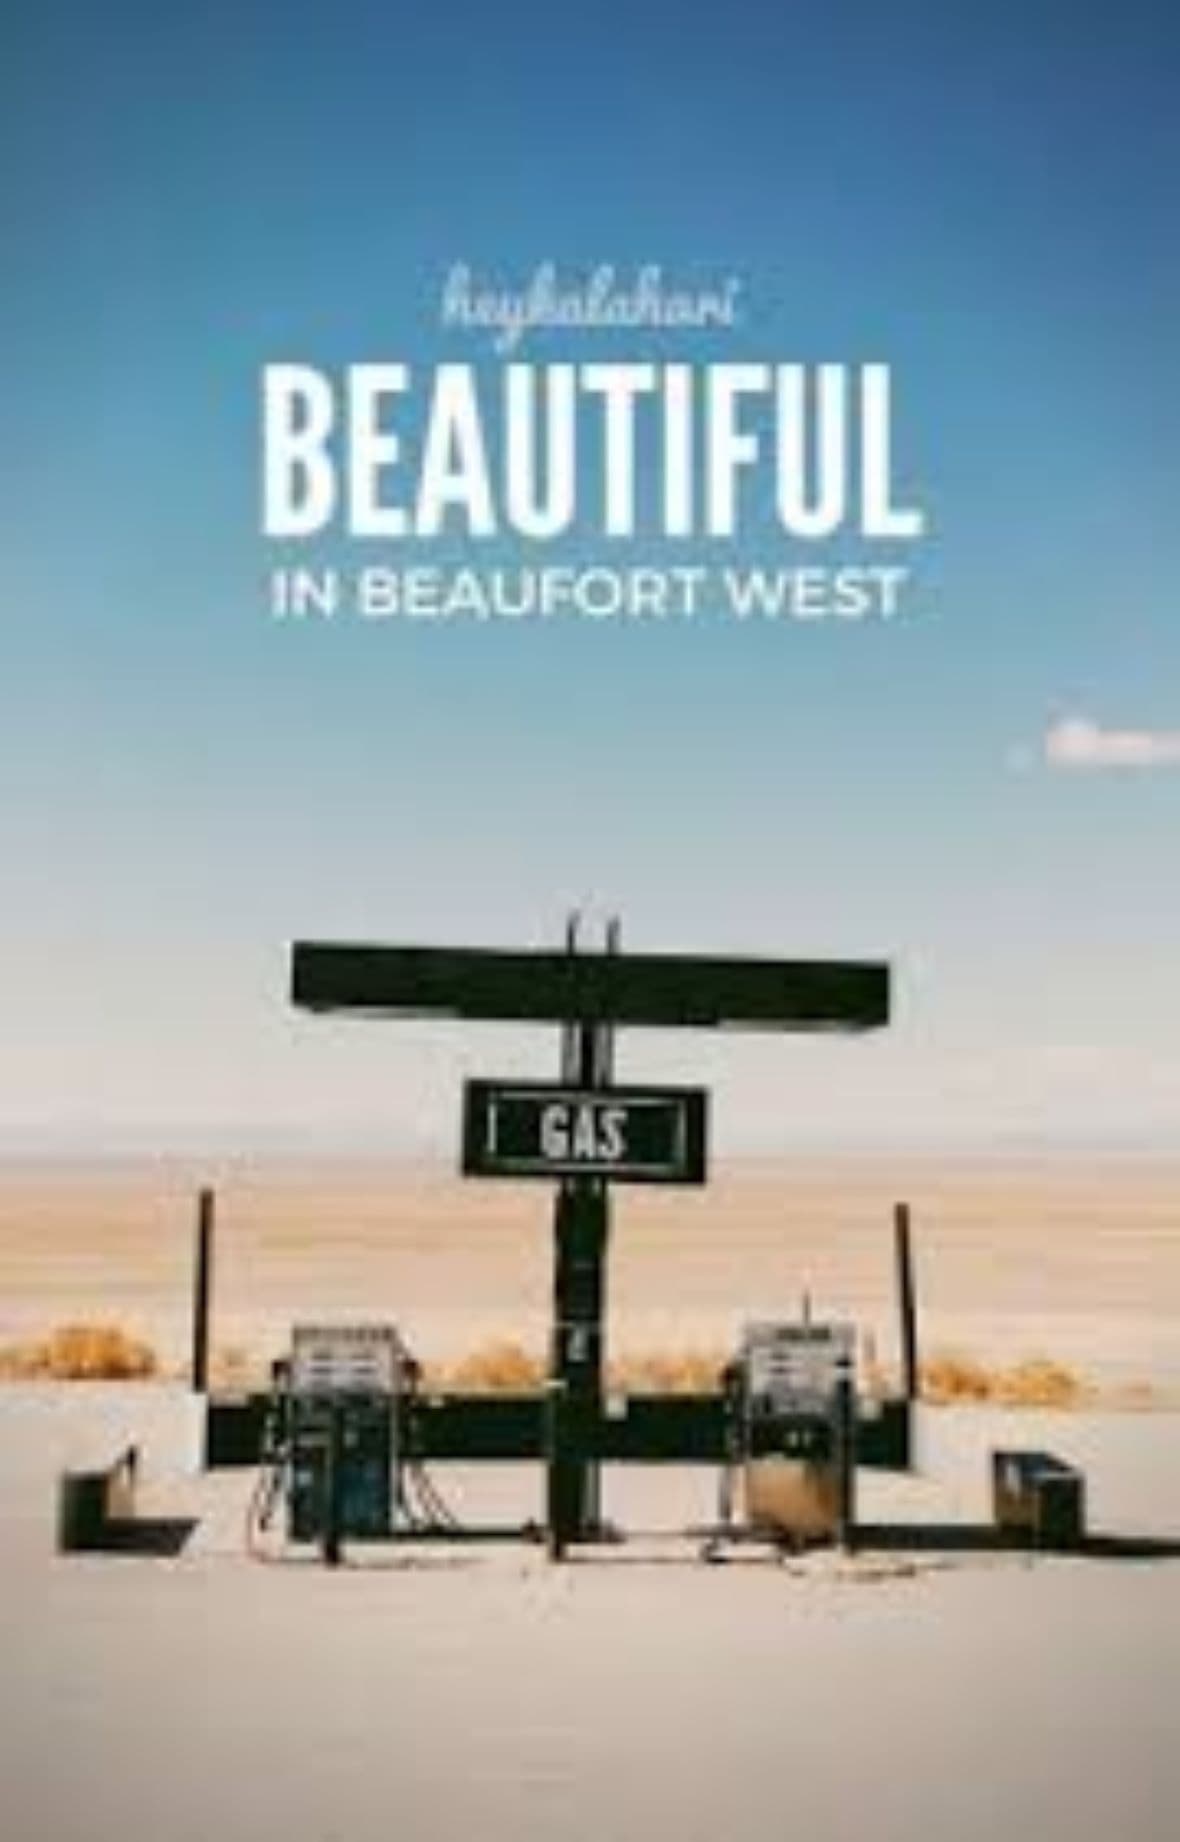 Beautiful in Beaufort-Wes